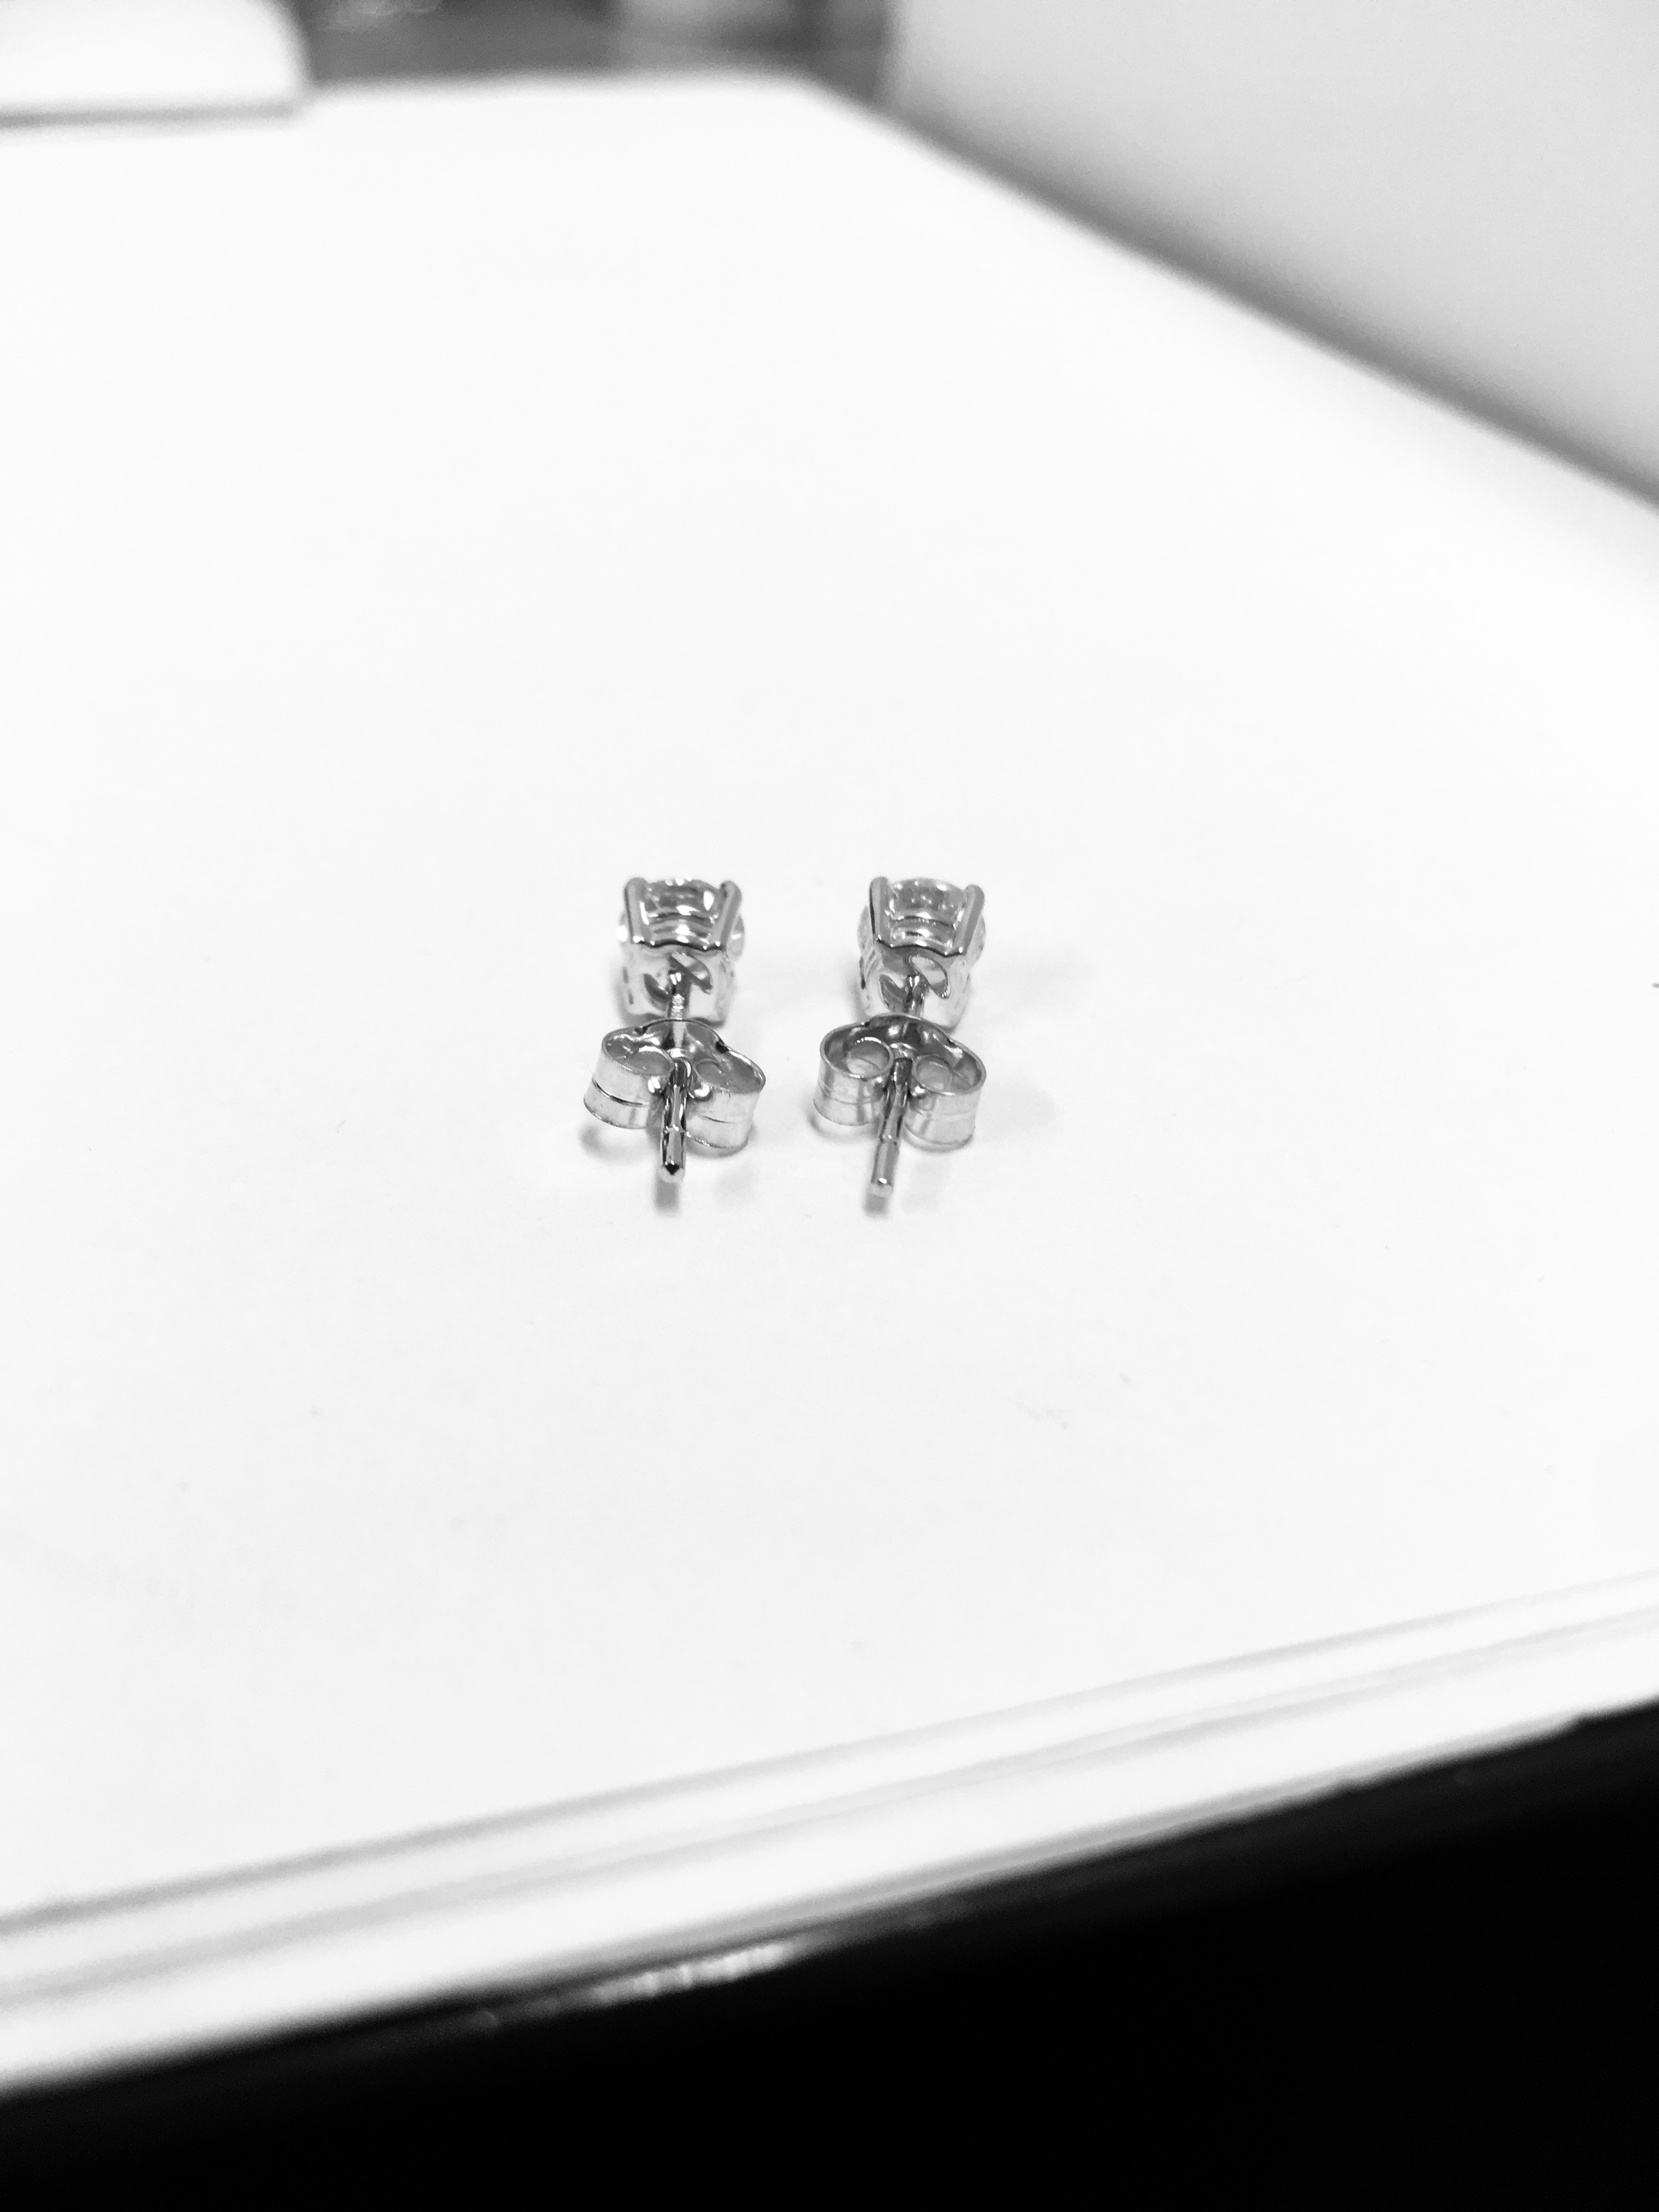 1.40Ct Diamond Solitaire Stud Earrings Set In Platinum. - Image 3 of 3